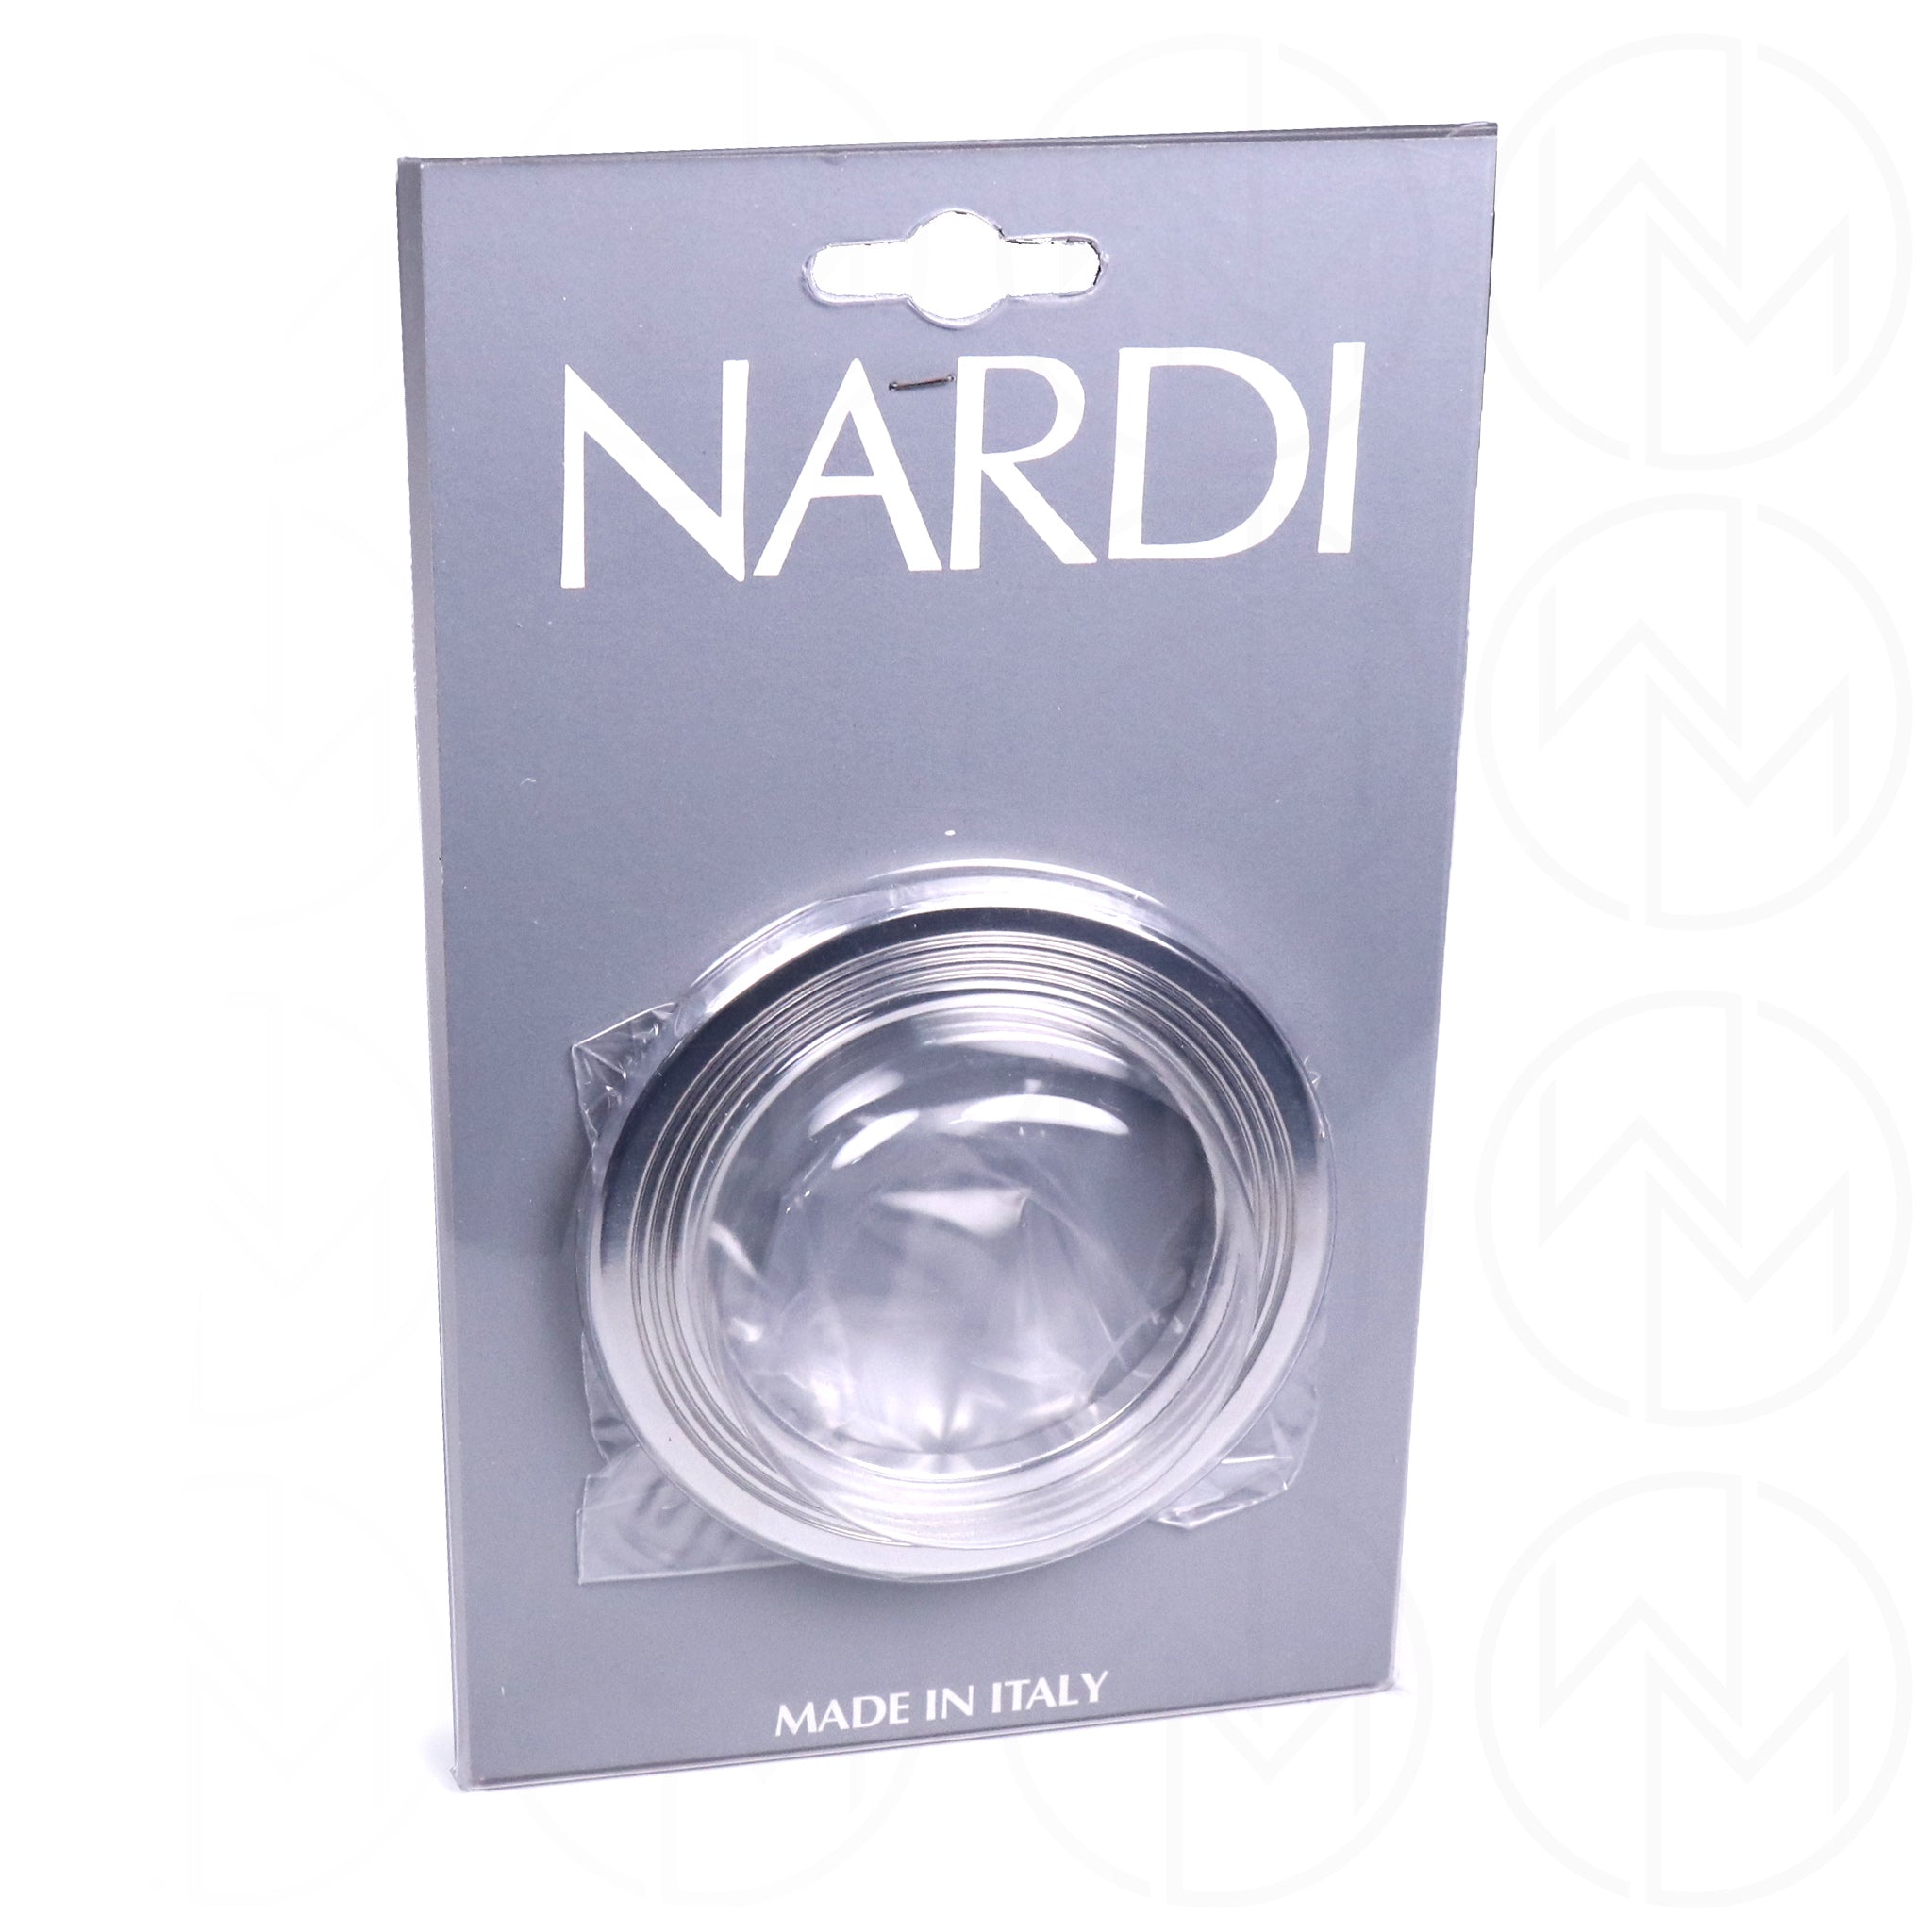 Nardi Polished Horn Button Trim Ring